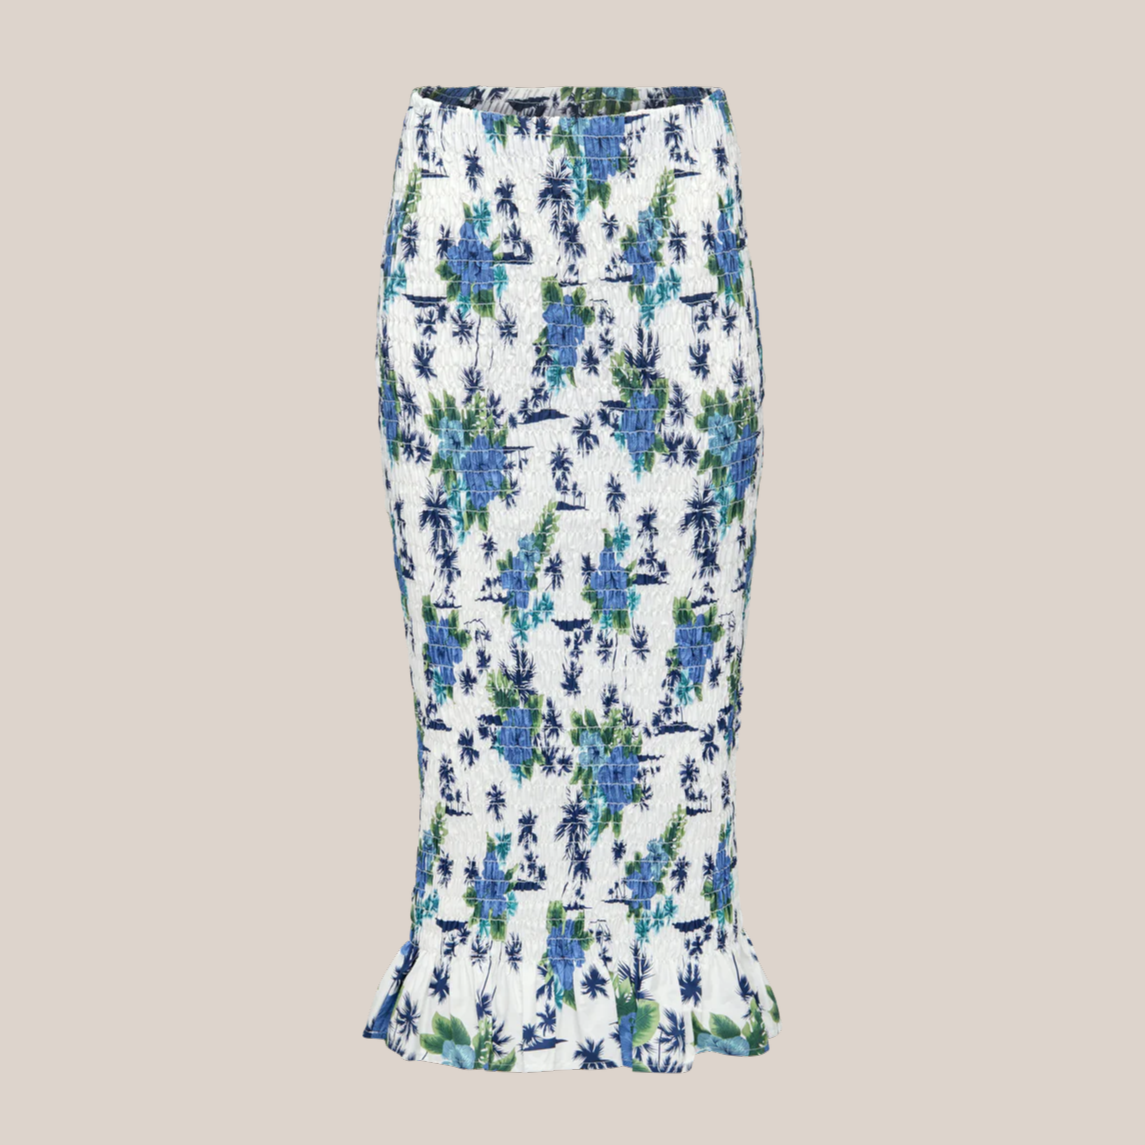 Gotstyle Fashion - Hilary MacMillan Skirts Ruched Floral Print Midi Skirt - Multi